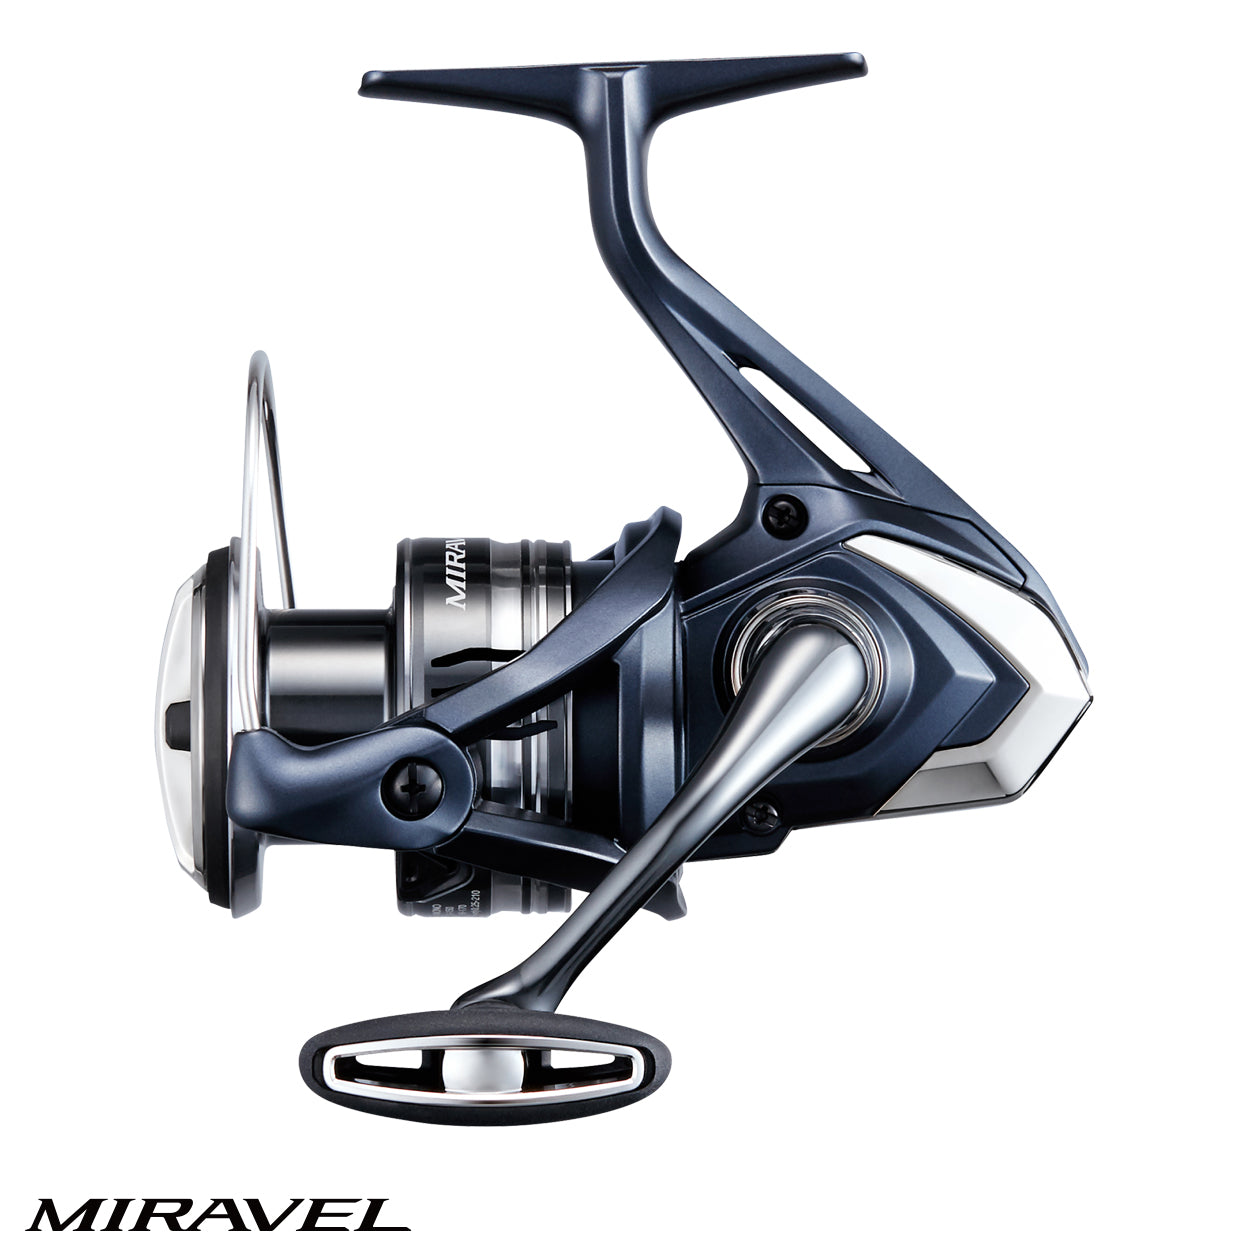 Shimano MIRAVEL SPINNING FISHING REEL